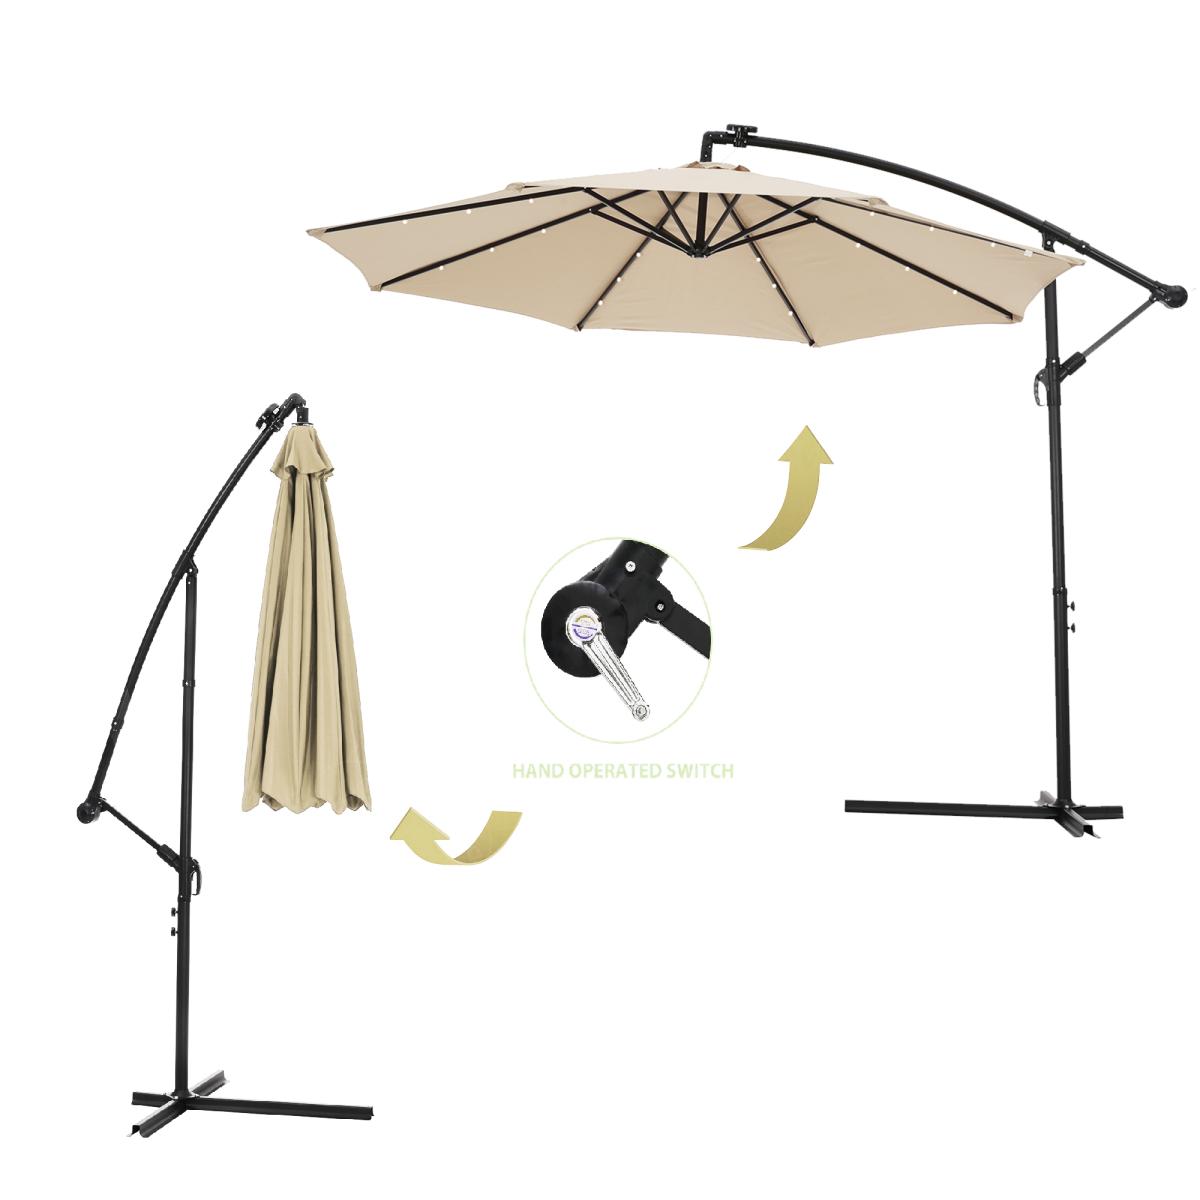 10 Ft Solar Led Patio Outdoor Umbrella Hanging Cantilever Umbrella Offset Umbrella Easy Open Adustment with 32 Led Lights - tan